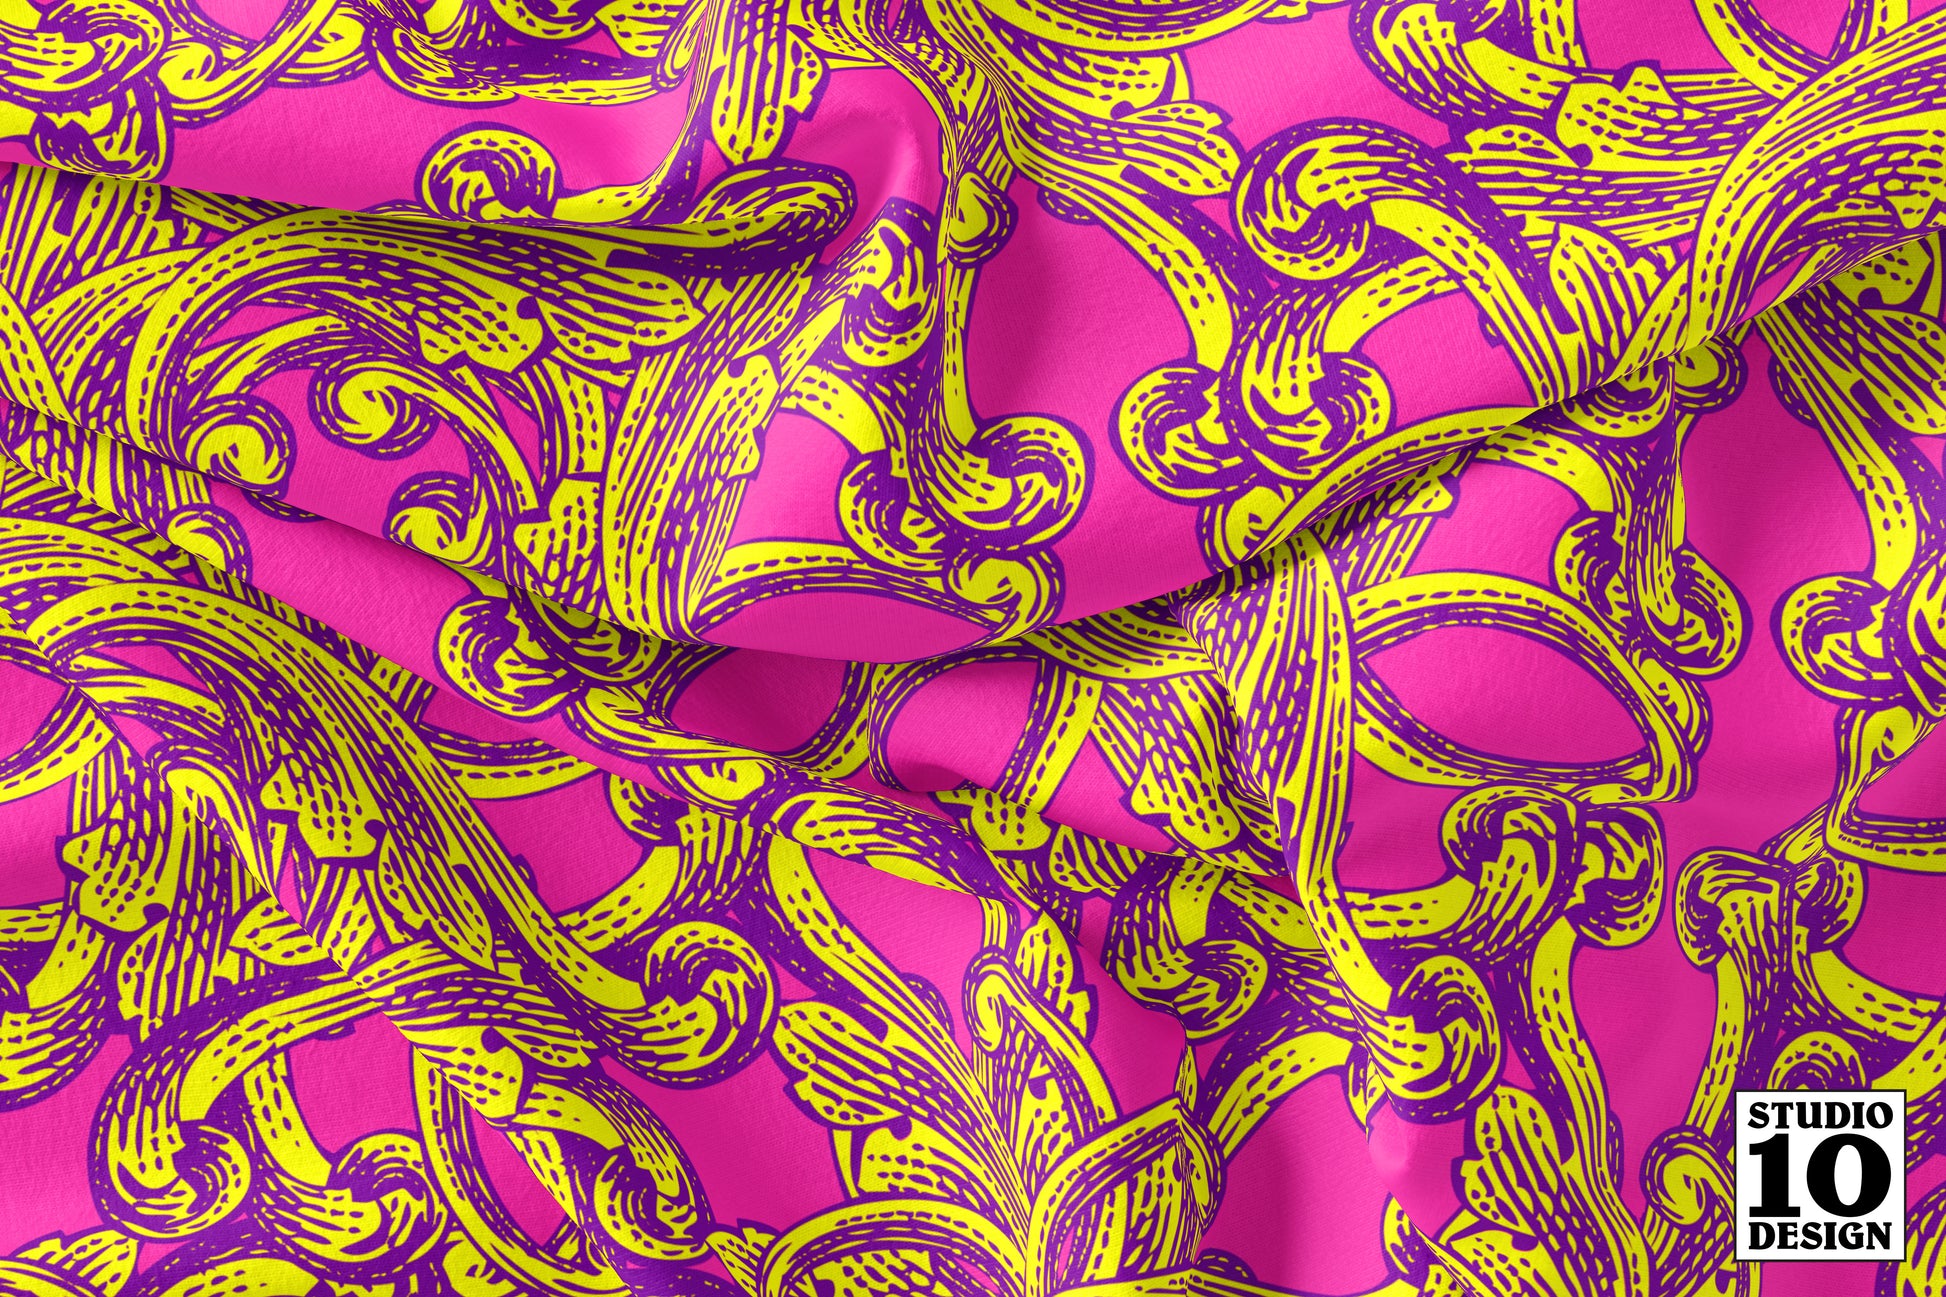 Baroque: Fancy Printed Fabric by Studio Ten Design